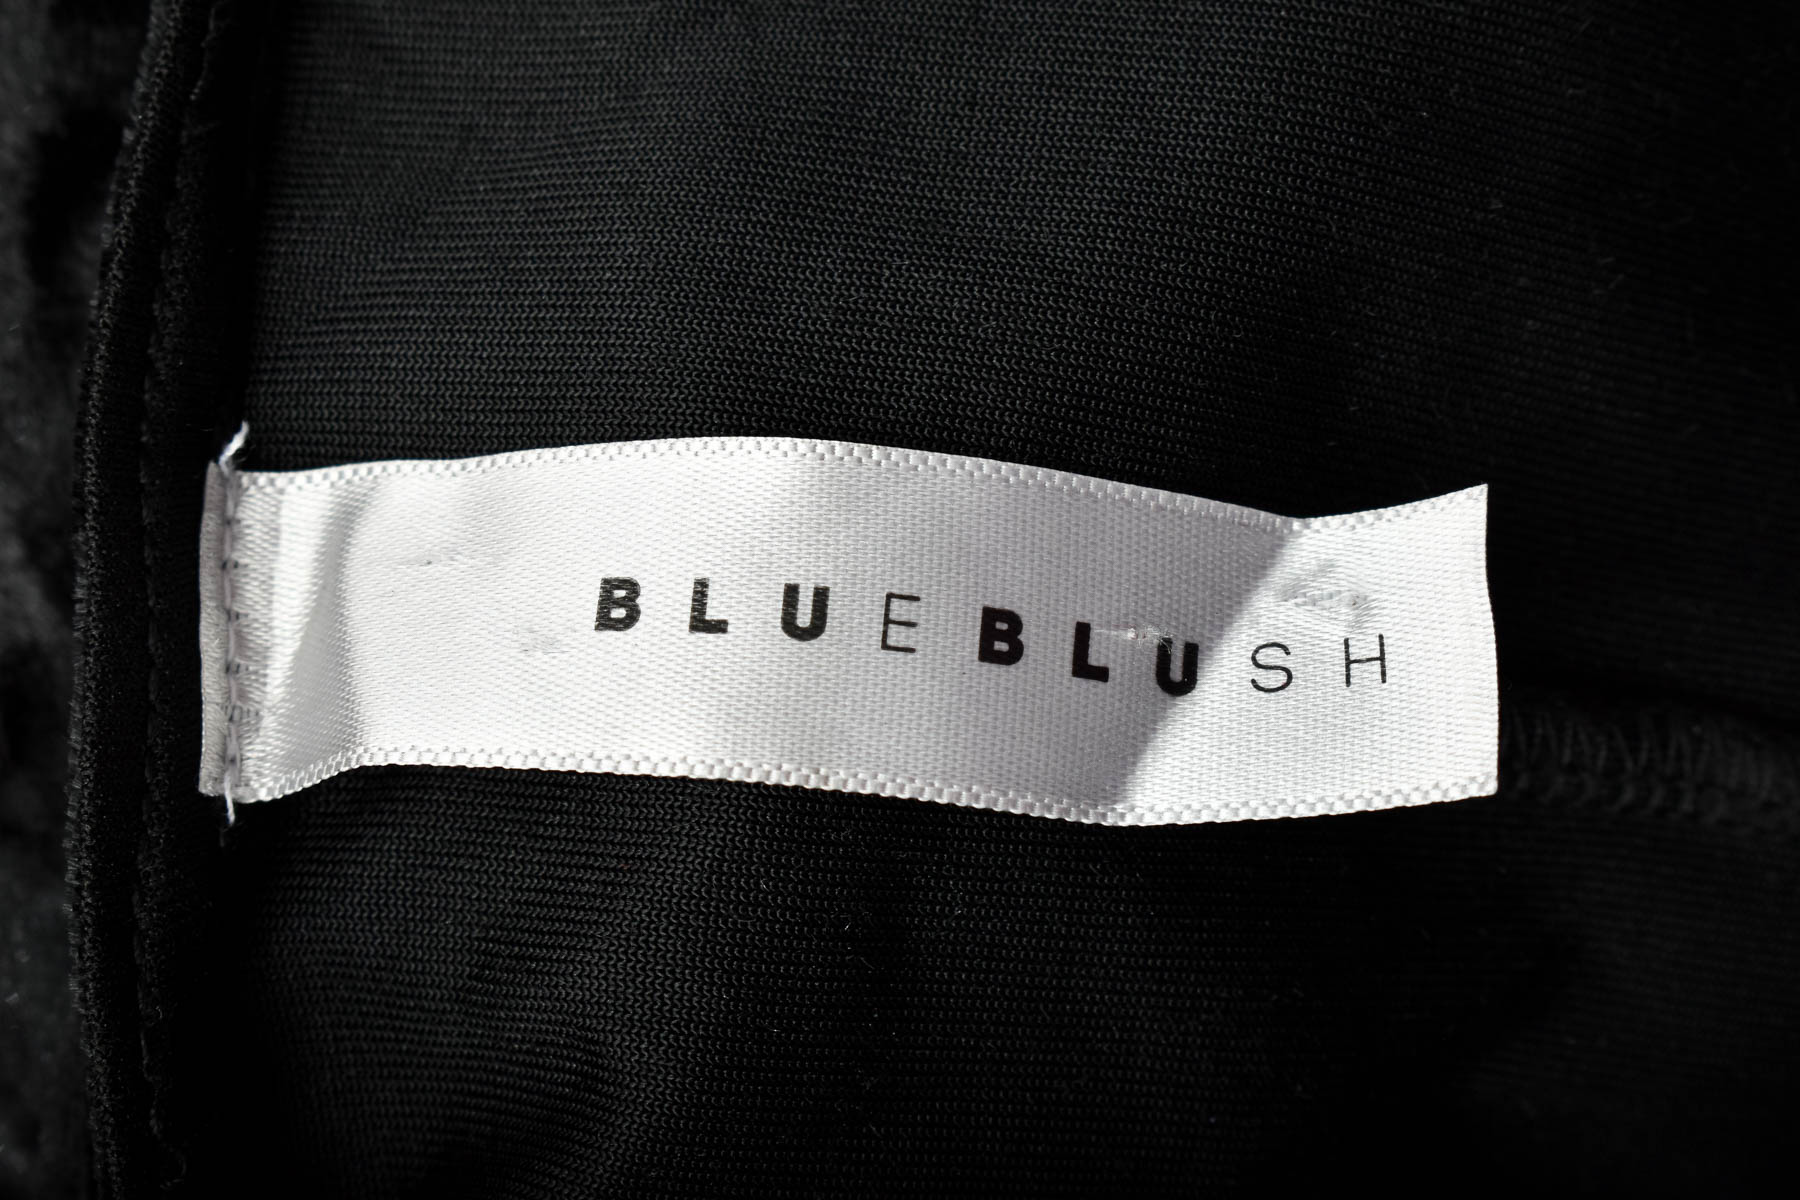 Dress - Blue blush - 2